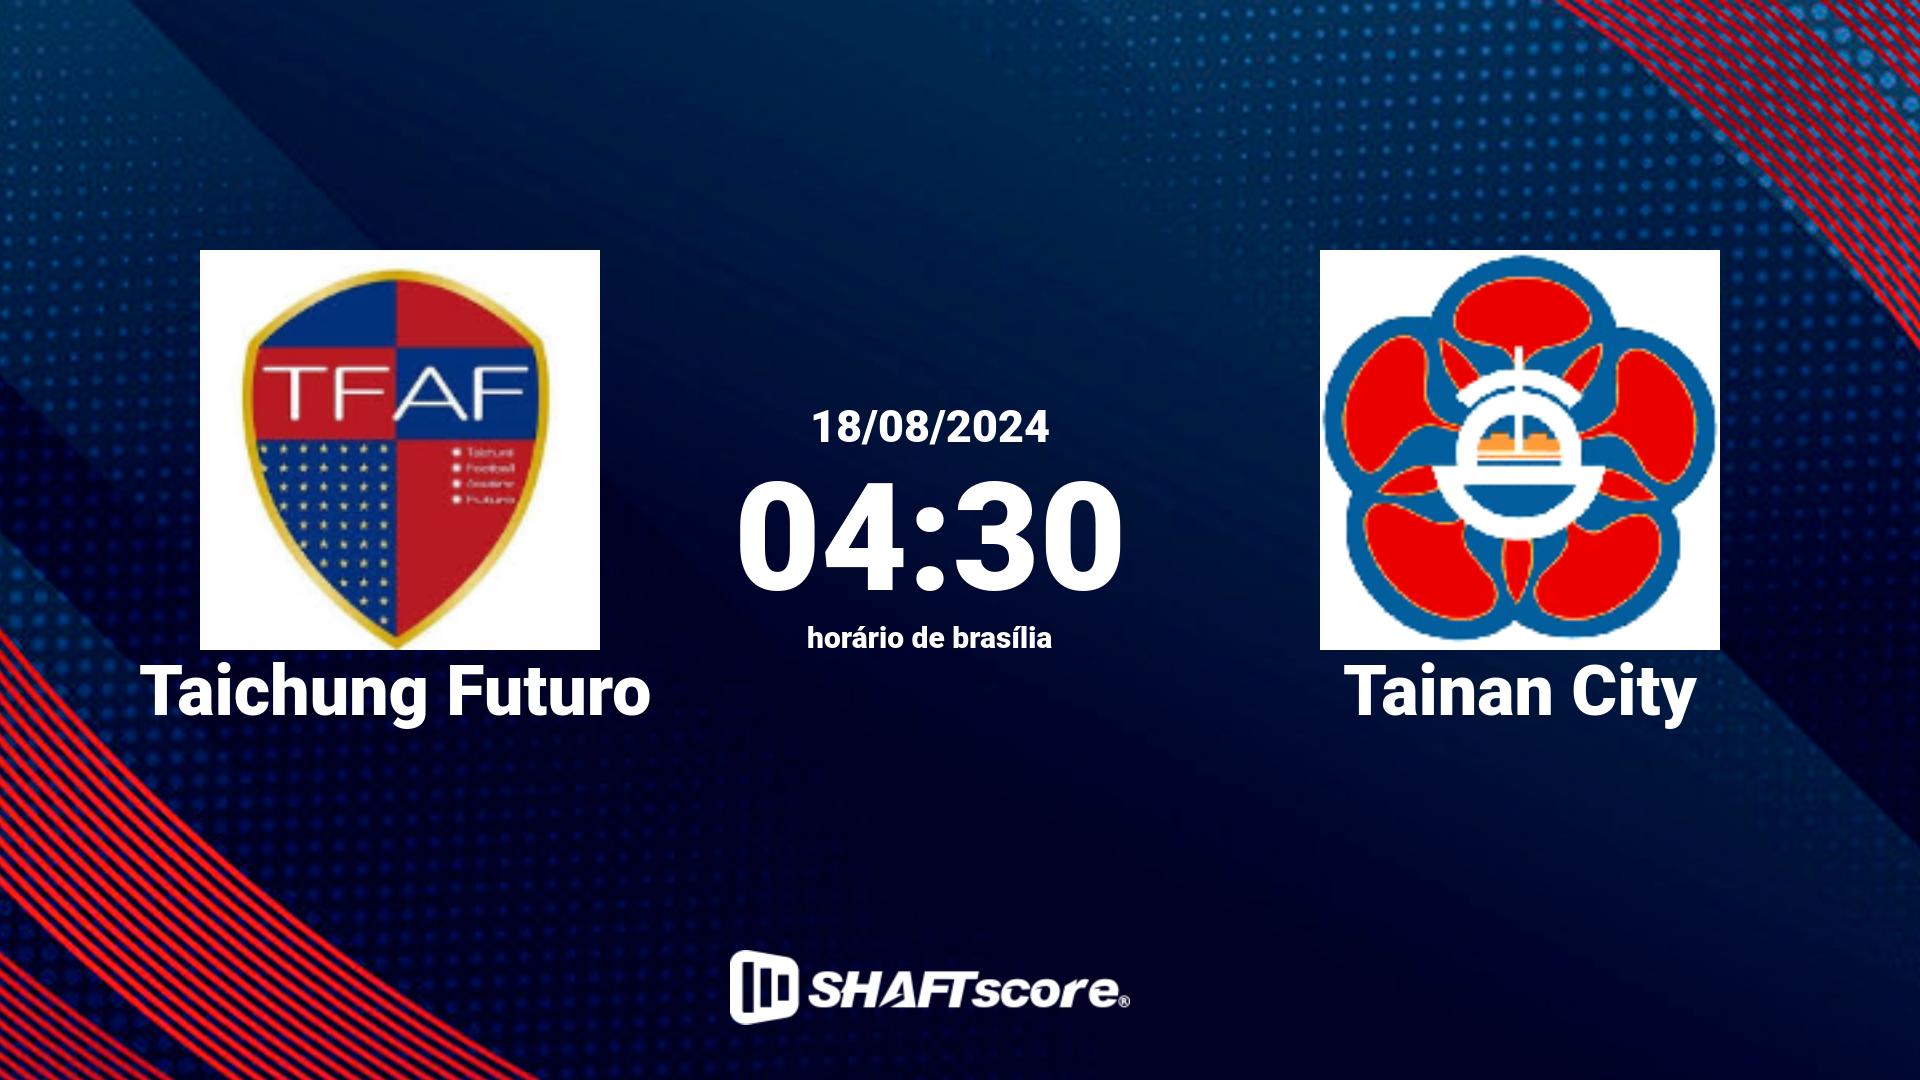 Estatísticas do jogo Taichung Futuro vs Tainan City 18.08 04:30